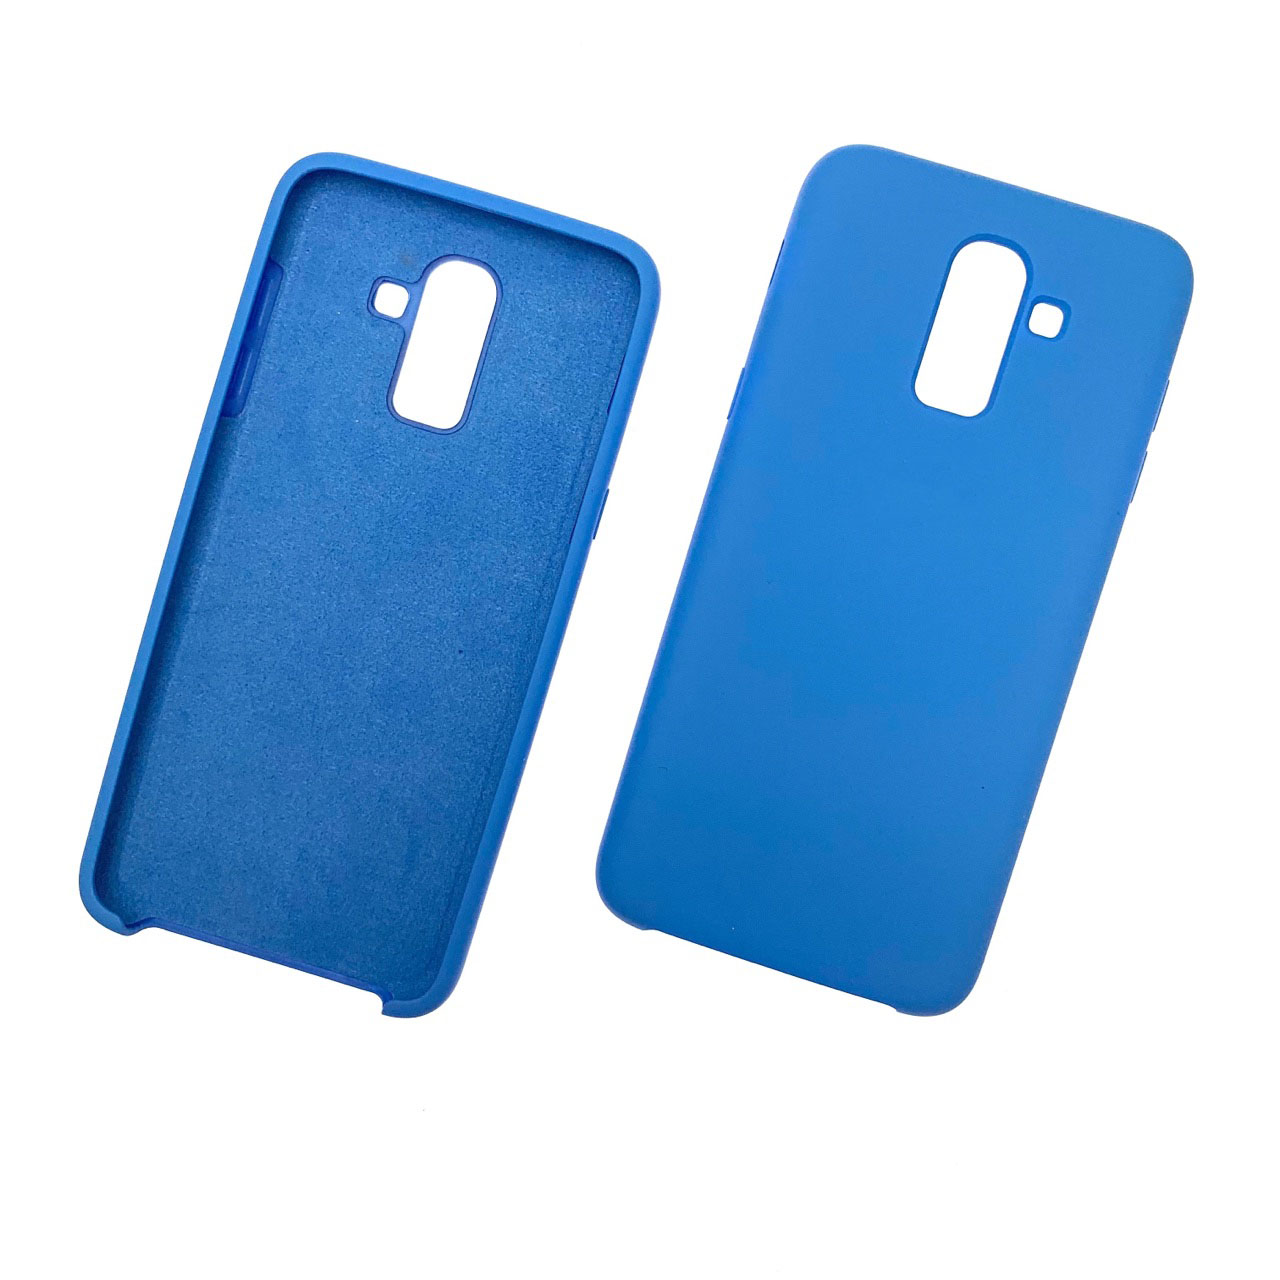 Чехол накладка Silicon Cover для SAMSUNG Galaxy J8 (SM-J800F), силикон, бархат, цвет светло синий.